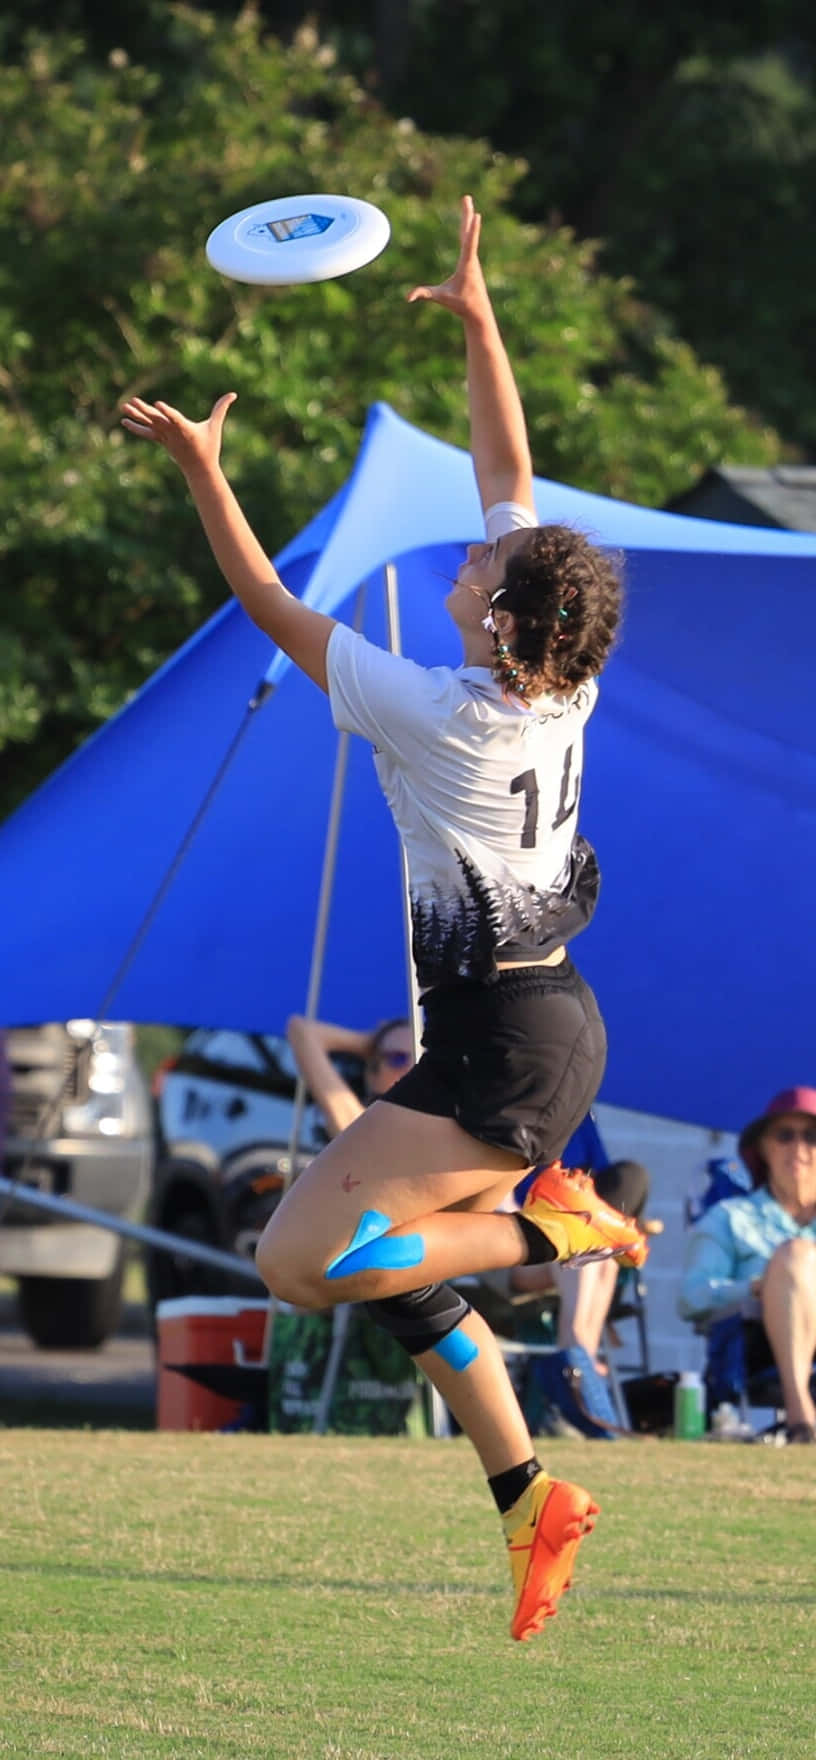 Atletafemenina Atrapando Un Frisbee En Un Fondo De Pantalla De Android Ultimate Frisbee